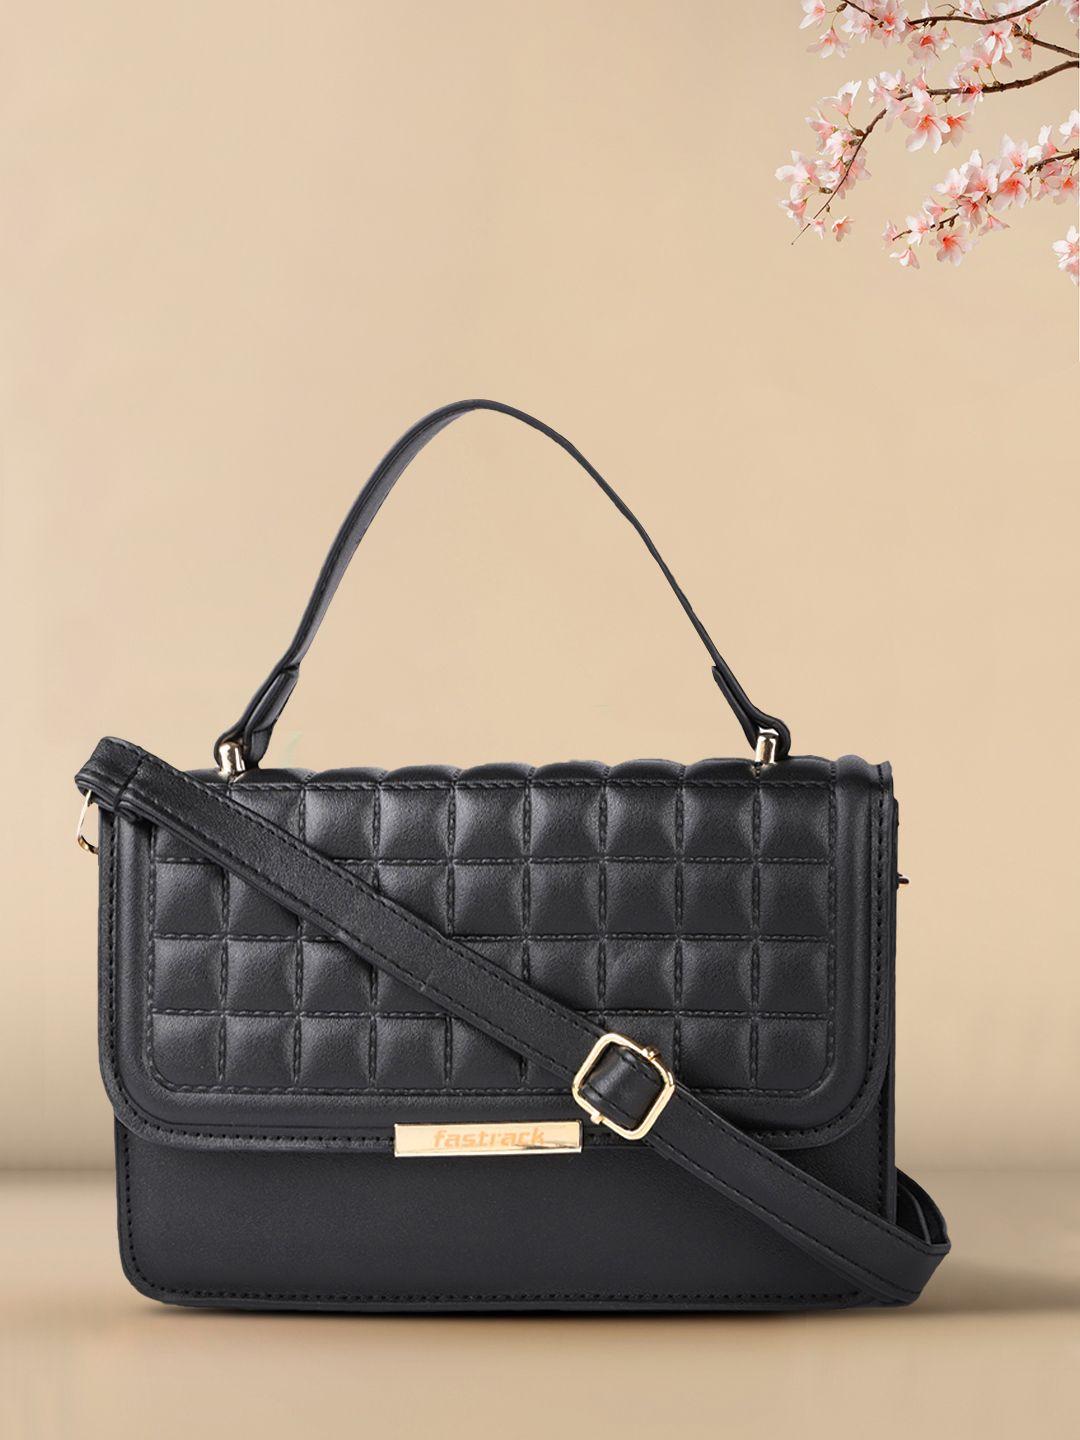 fastrack black textured satchel